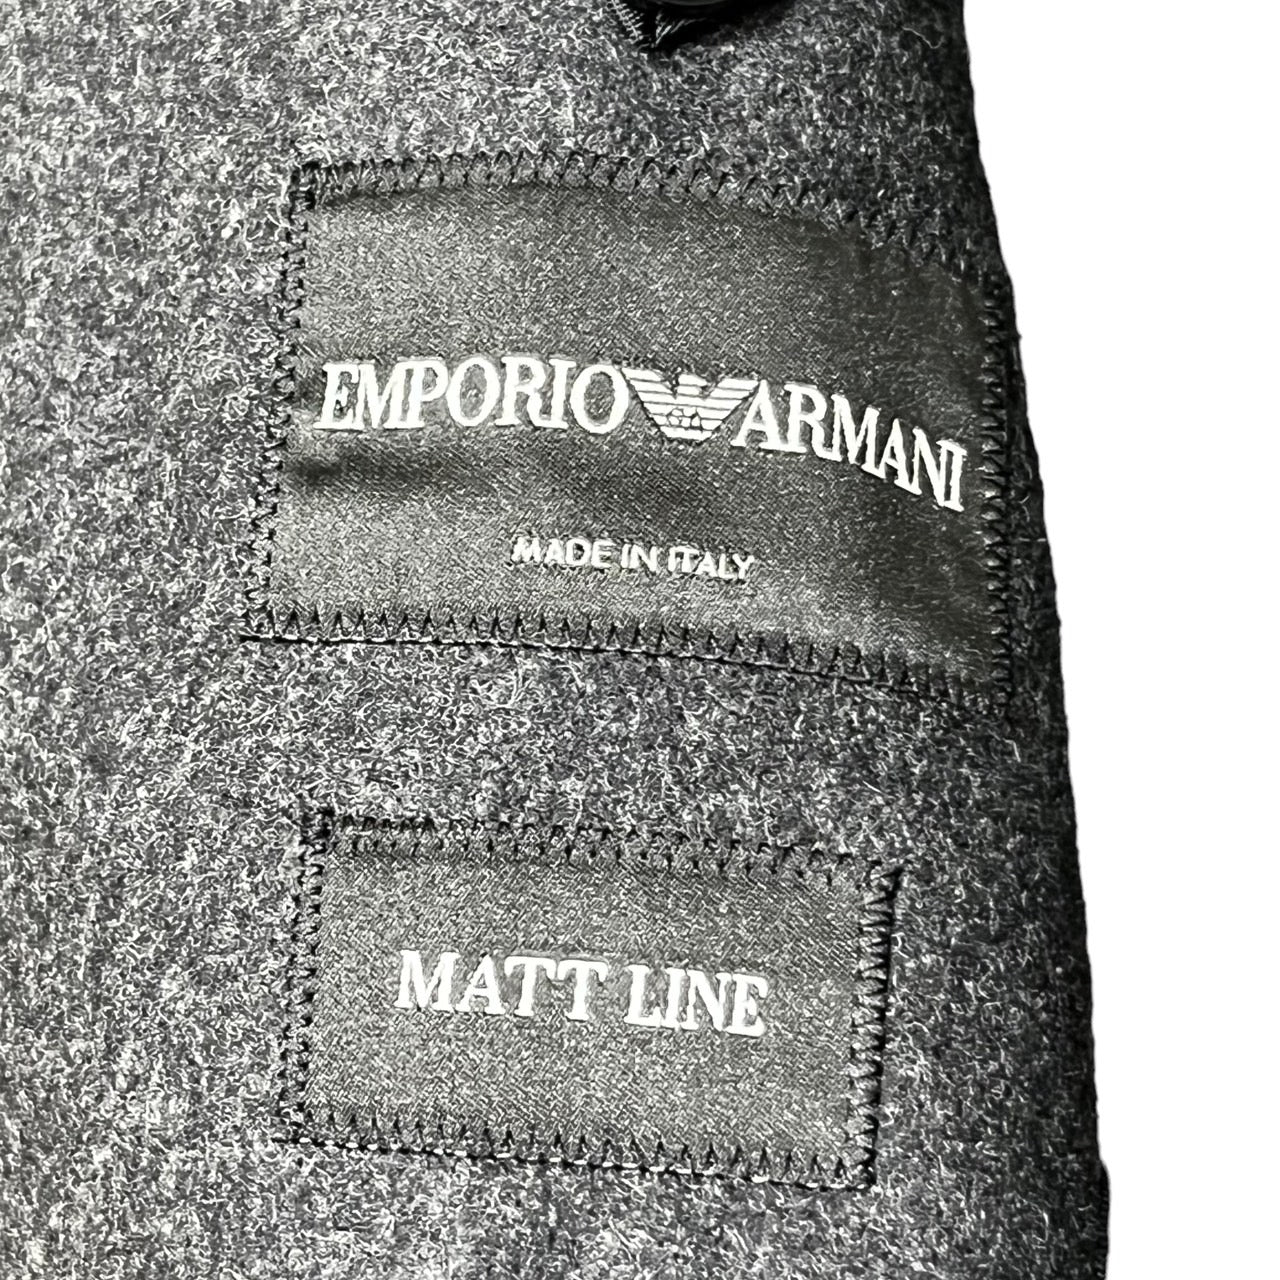 EMPORIO ARMANI(エンポリオアルマーニ) wool double-breasted jacket / ウール ダブルジャケット コート  H1G610 54(XL程度) グレー